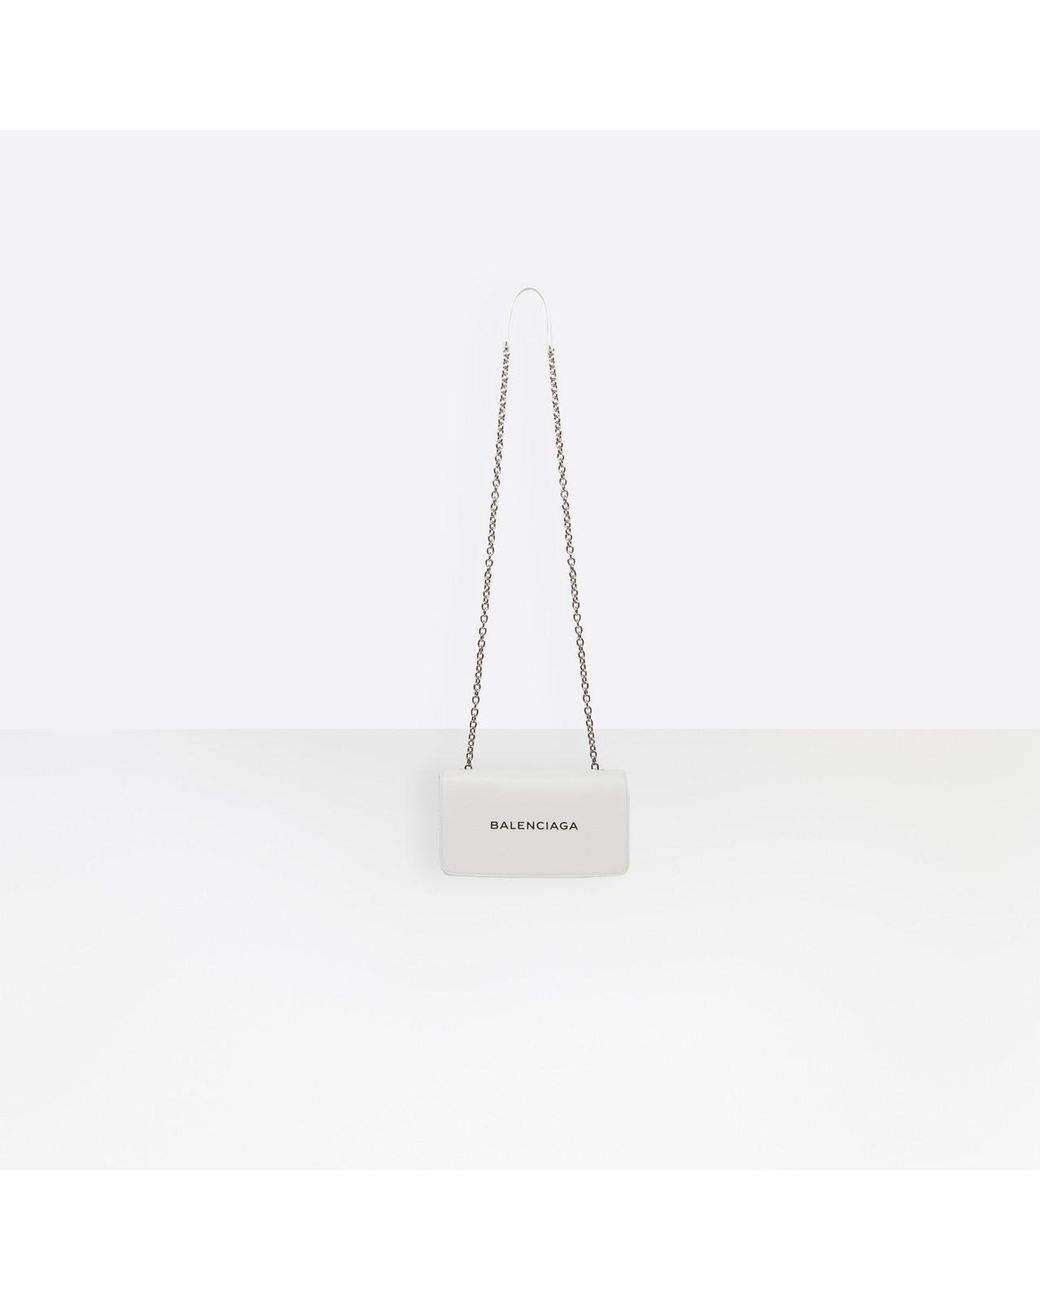 Balenciaga Everyday Chain Wallet in White | Lyst